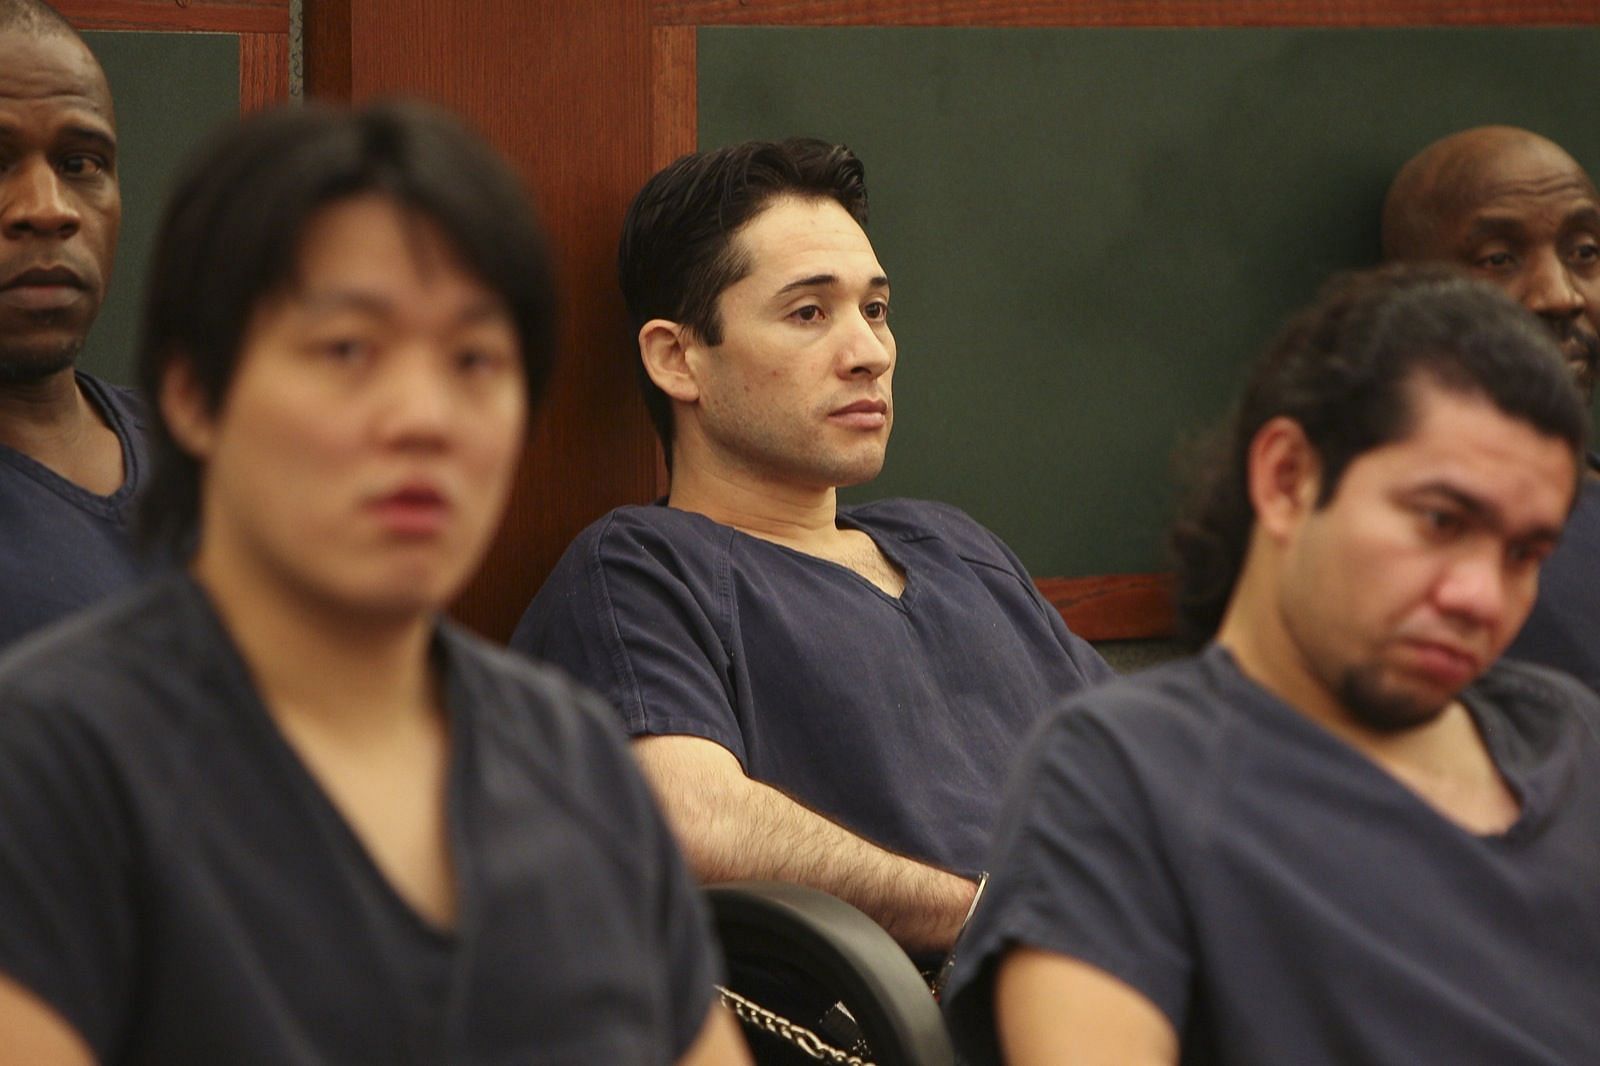 Porfirio Duarte-Herrera (center) in court waiting for his sentencing(Image via Mona Shield Payne)